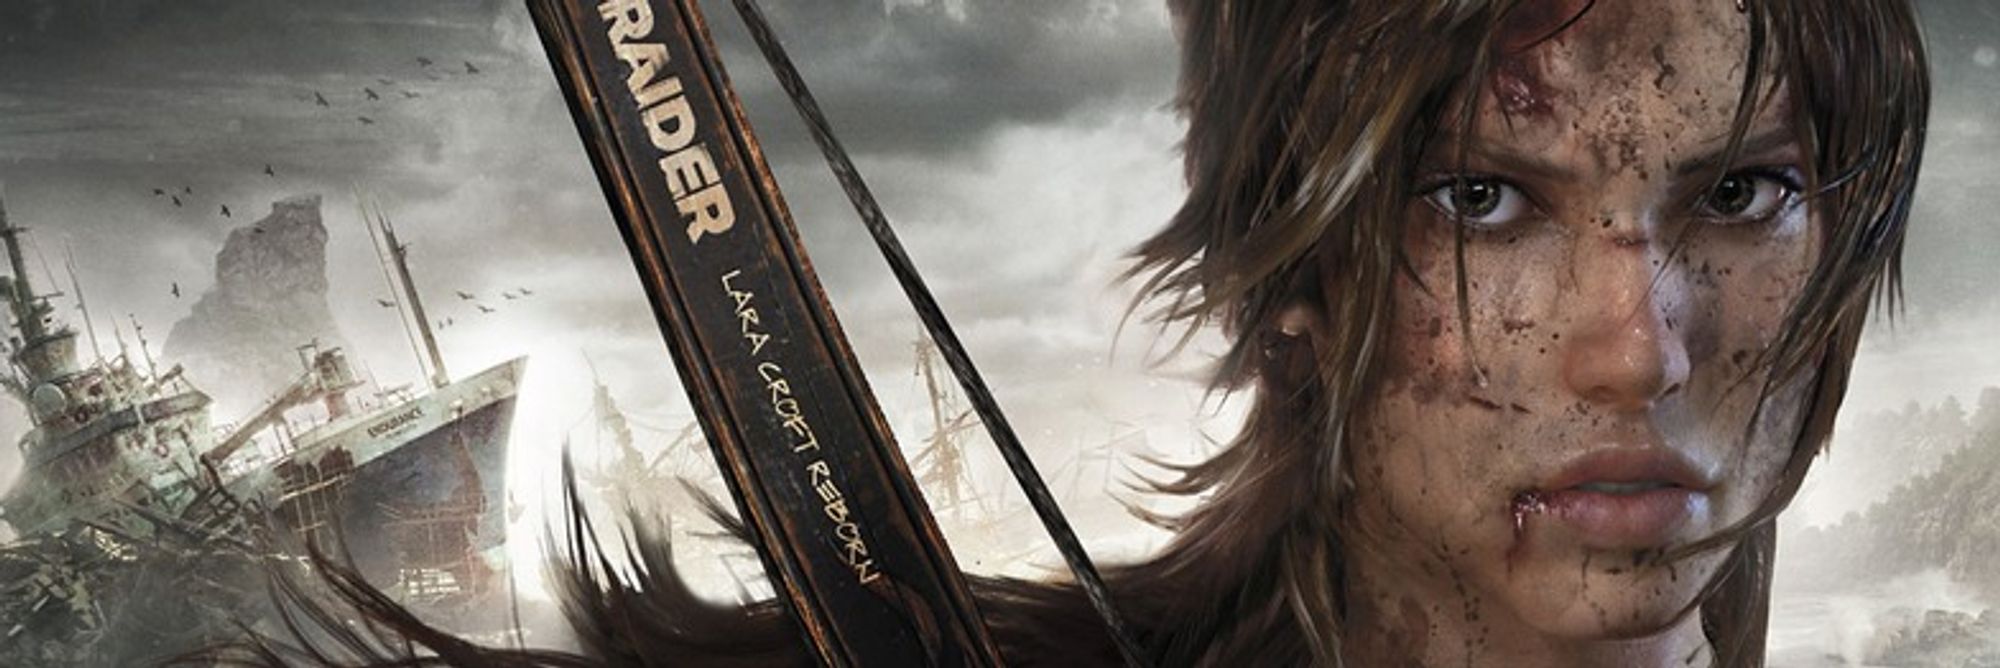 Nye Tomb Raider kan få 18-årsgrense - Gamer.no